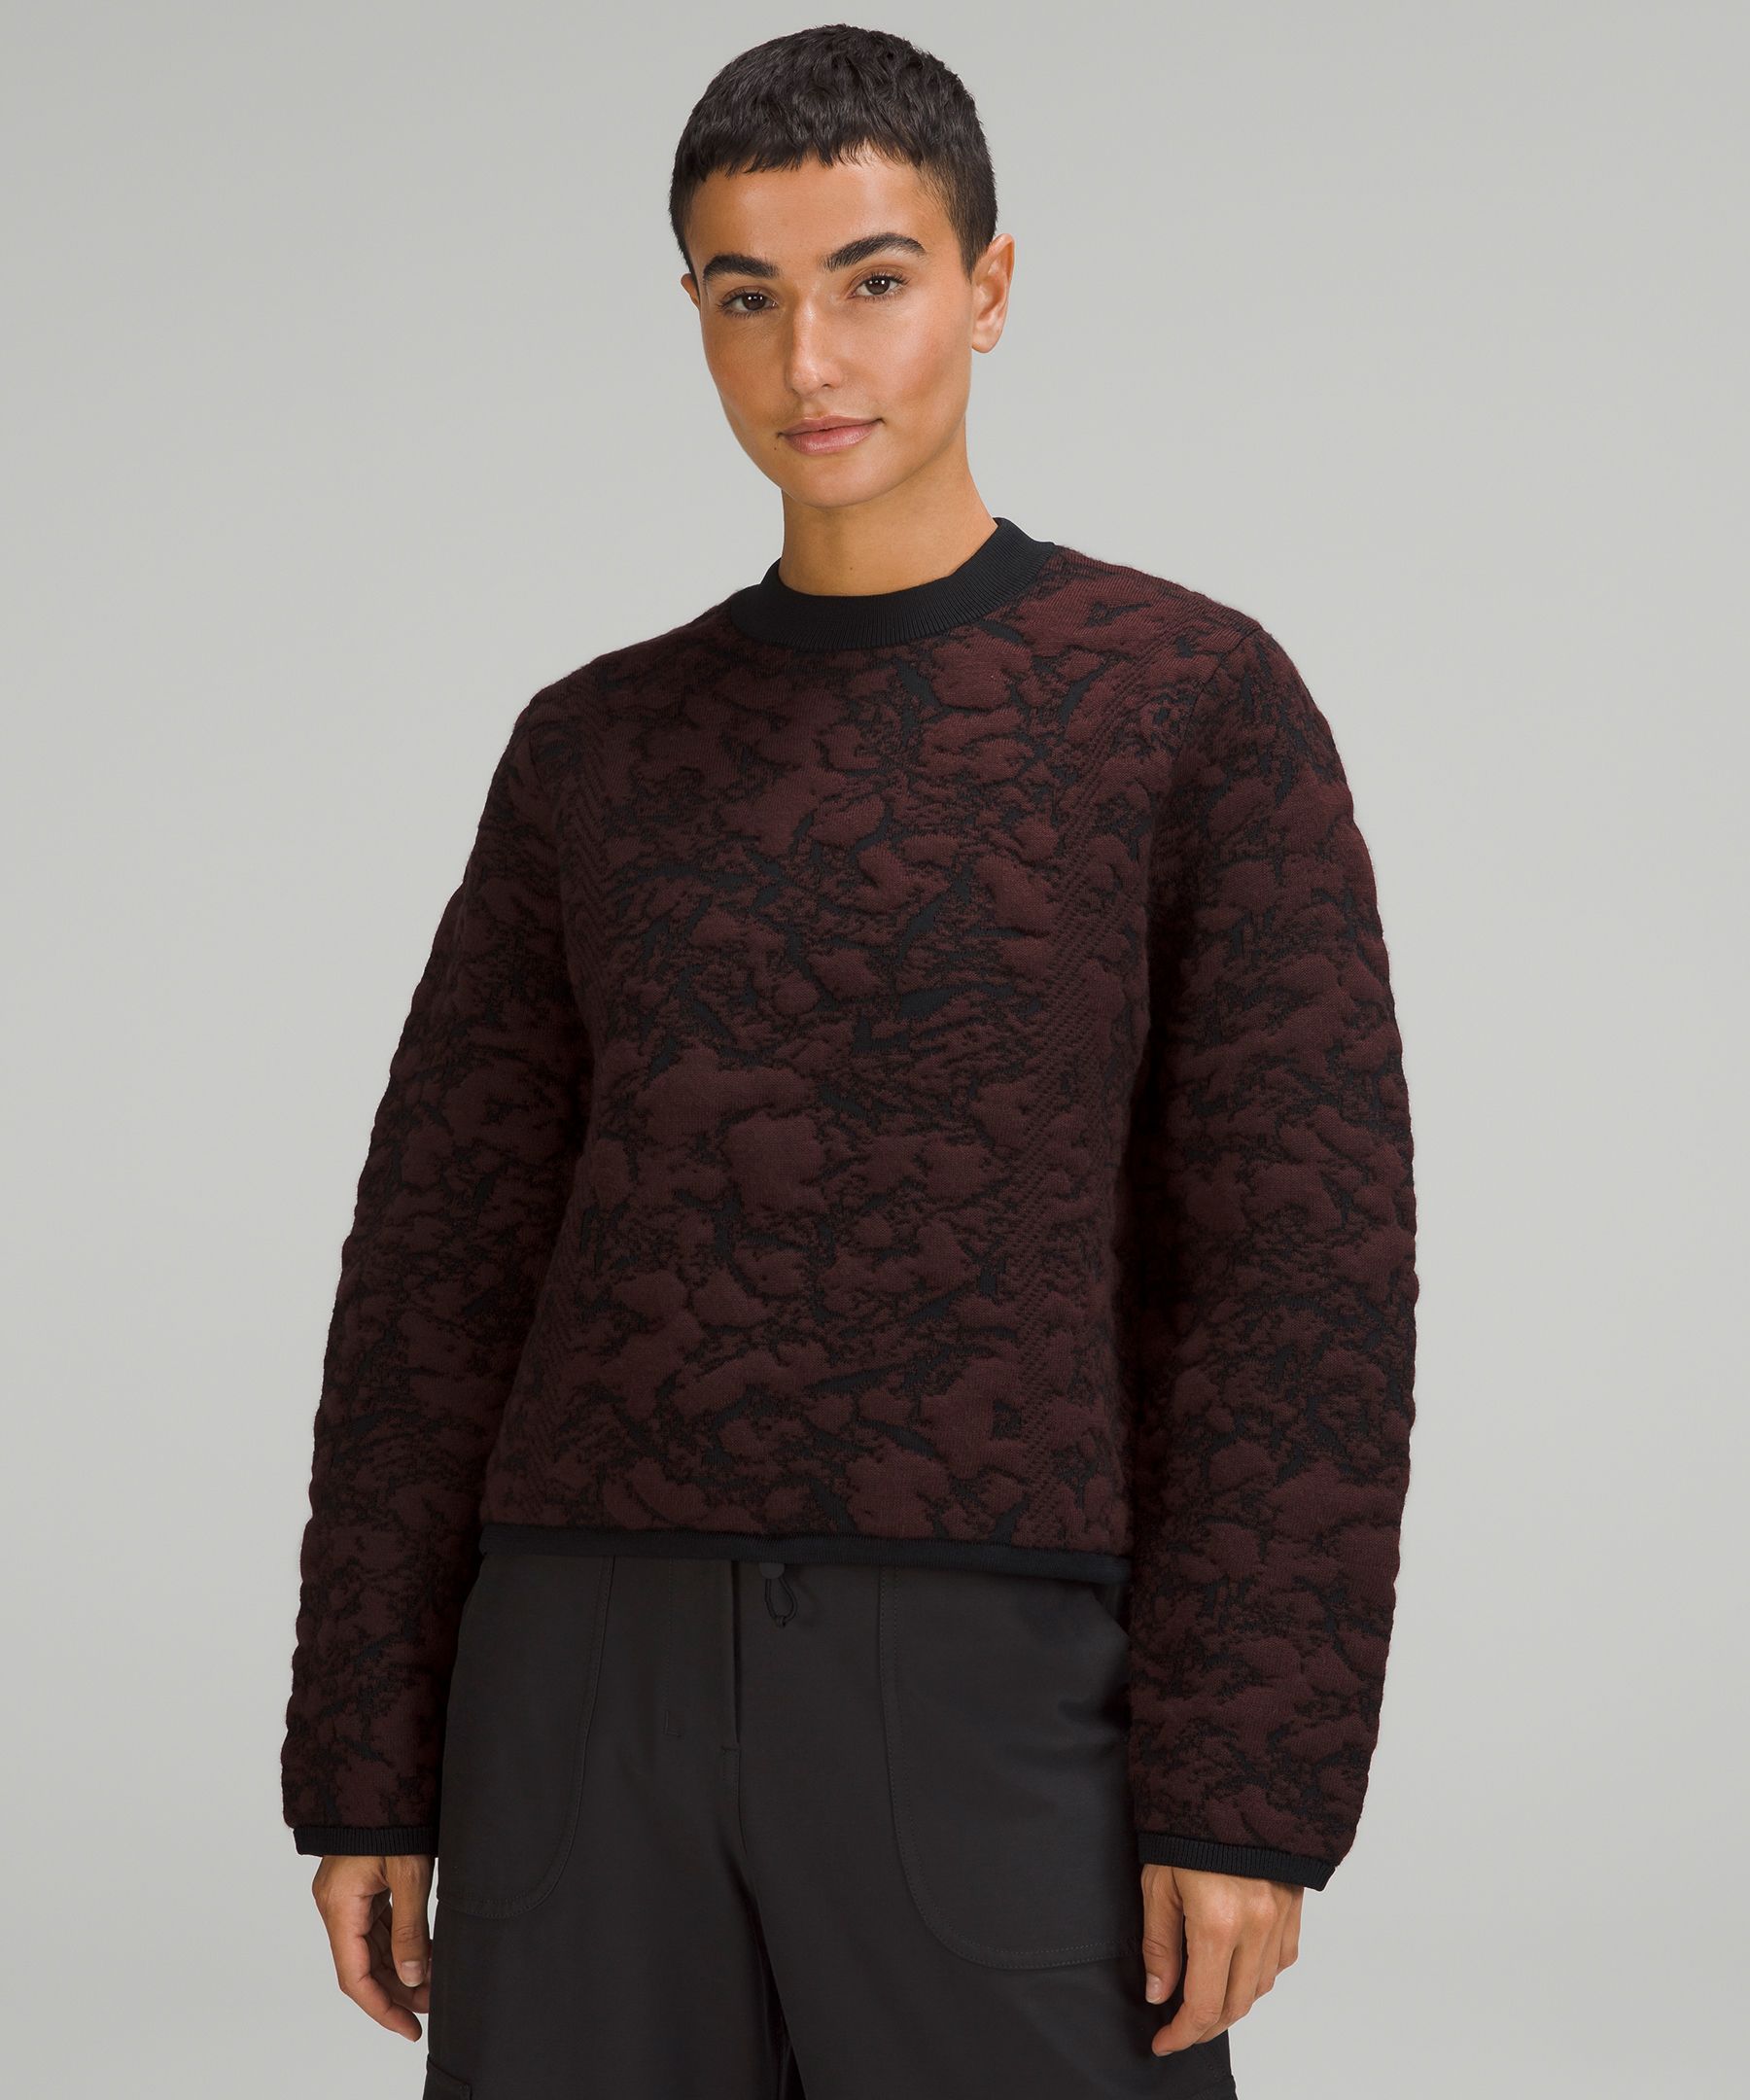 Lululemon Multi-Texture Crew Neck Sweater Sweatshirt